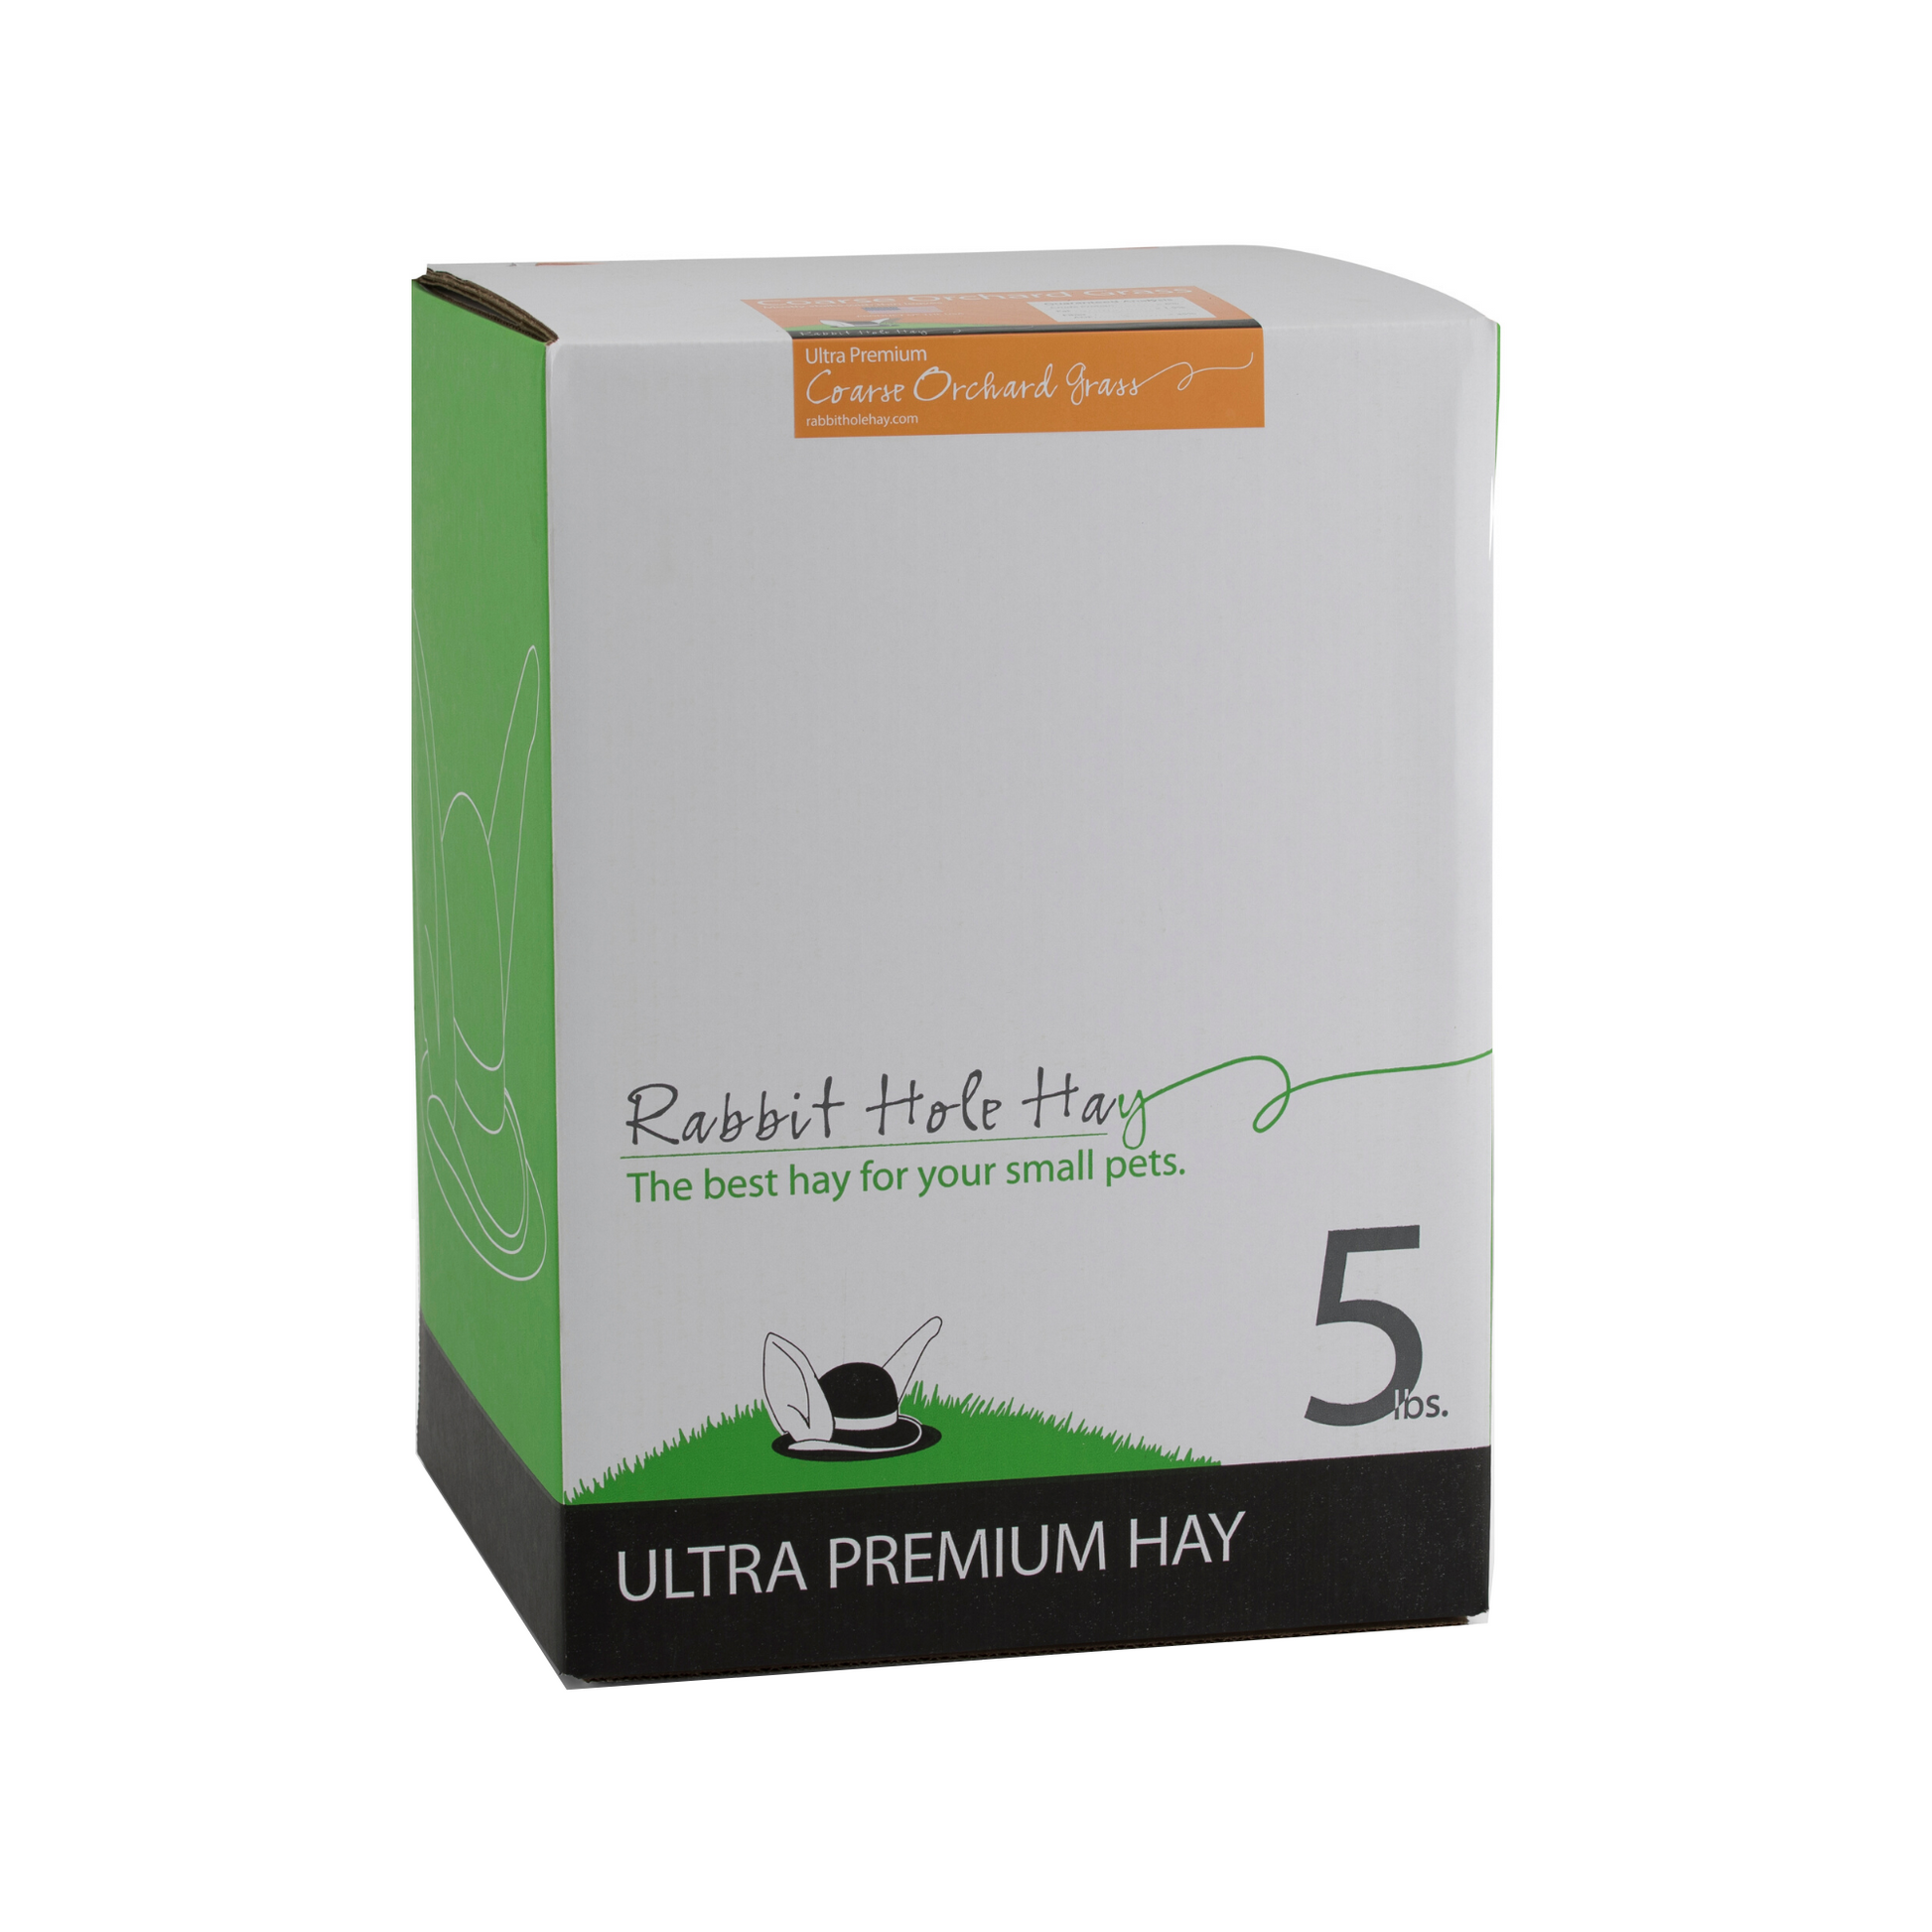 Ultra Premium Coarse Orchard Grass - 5lbs